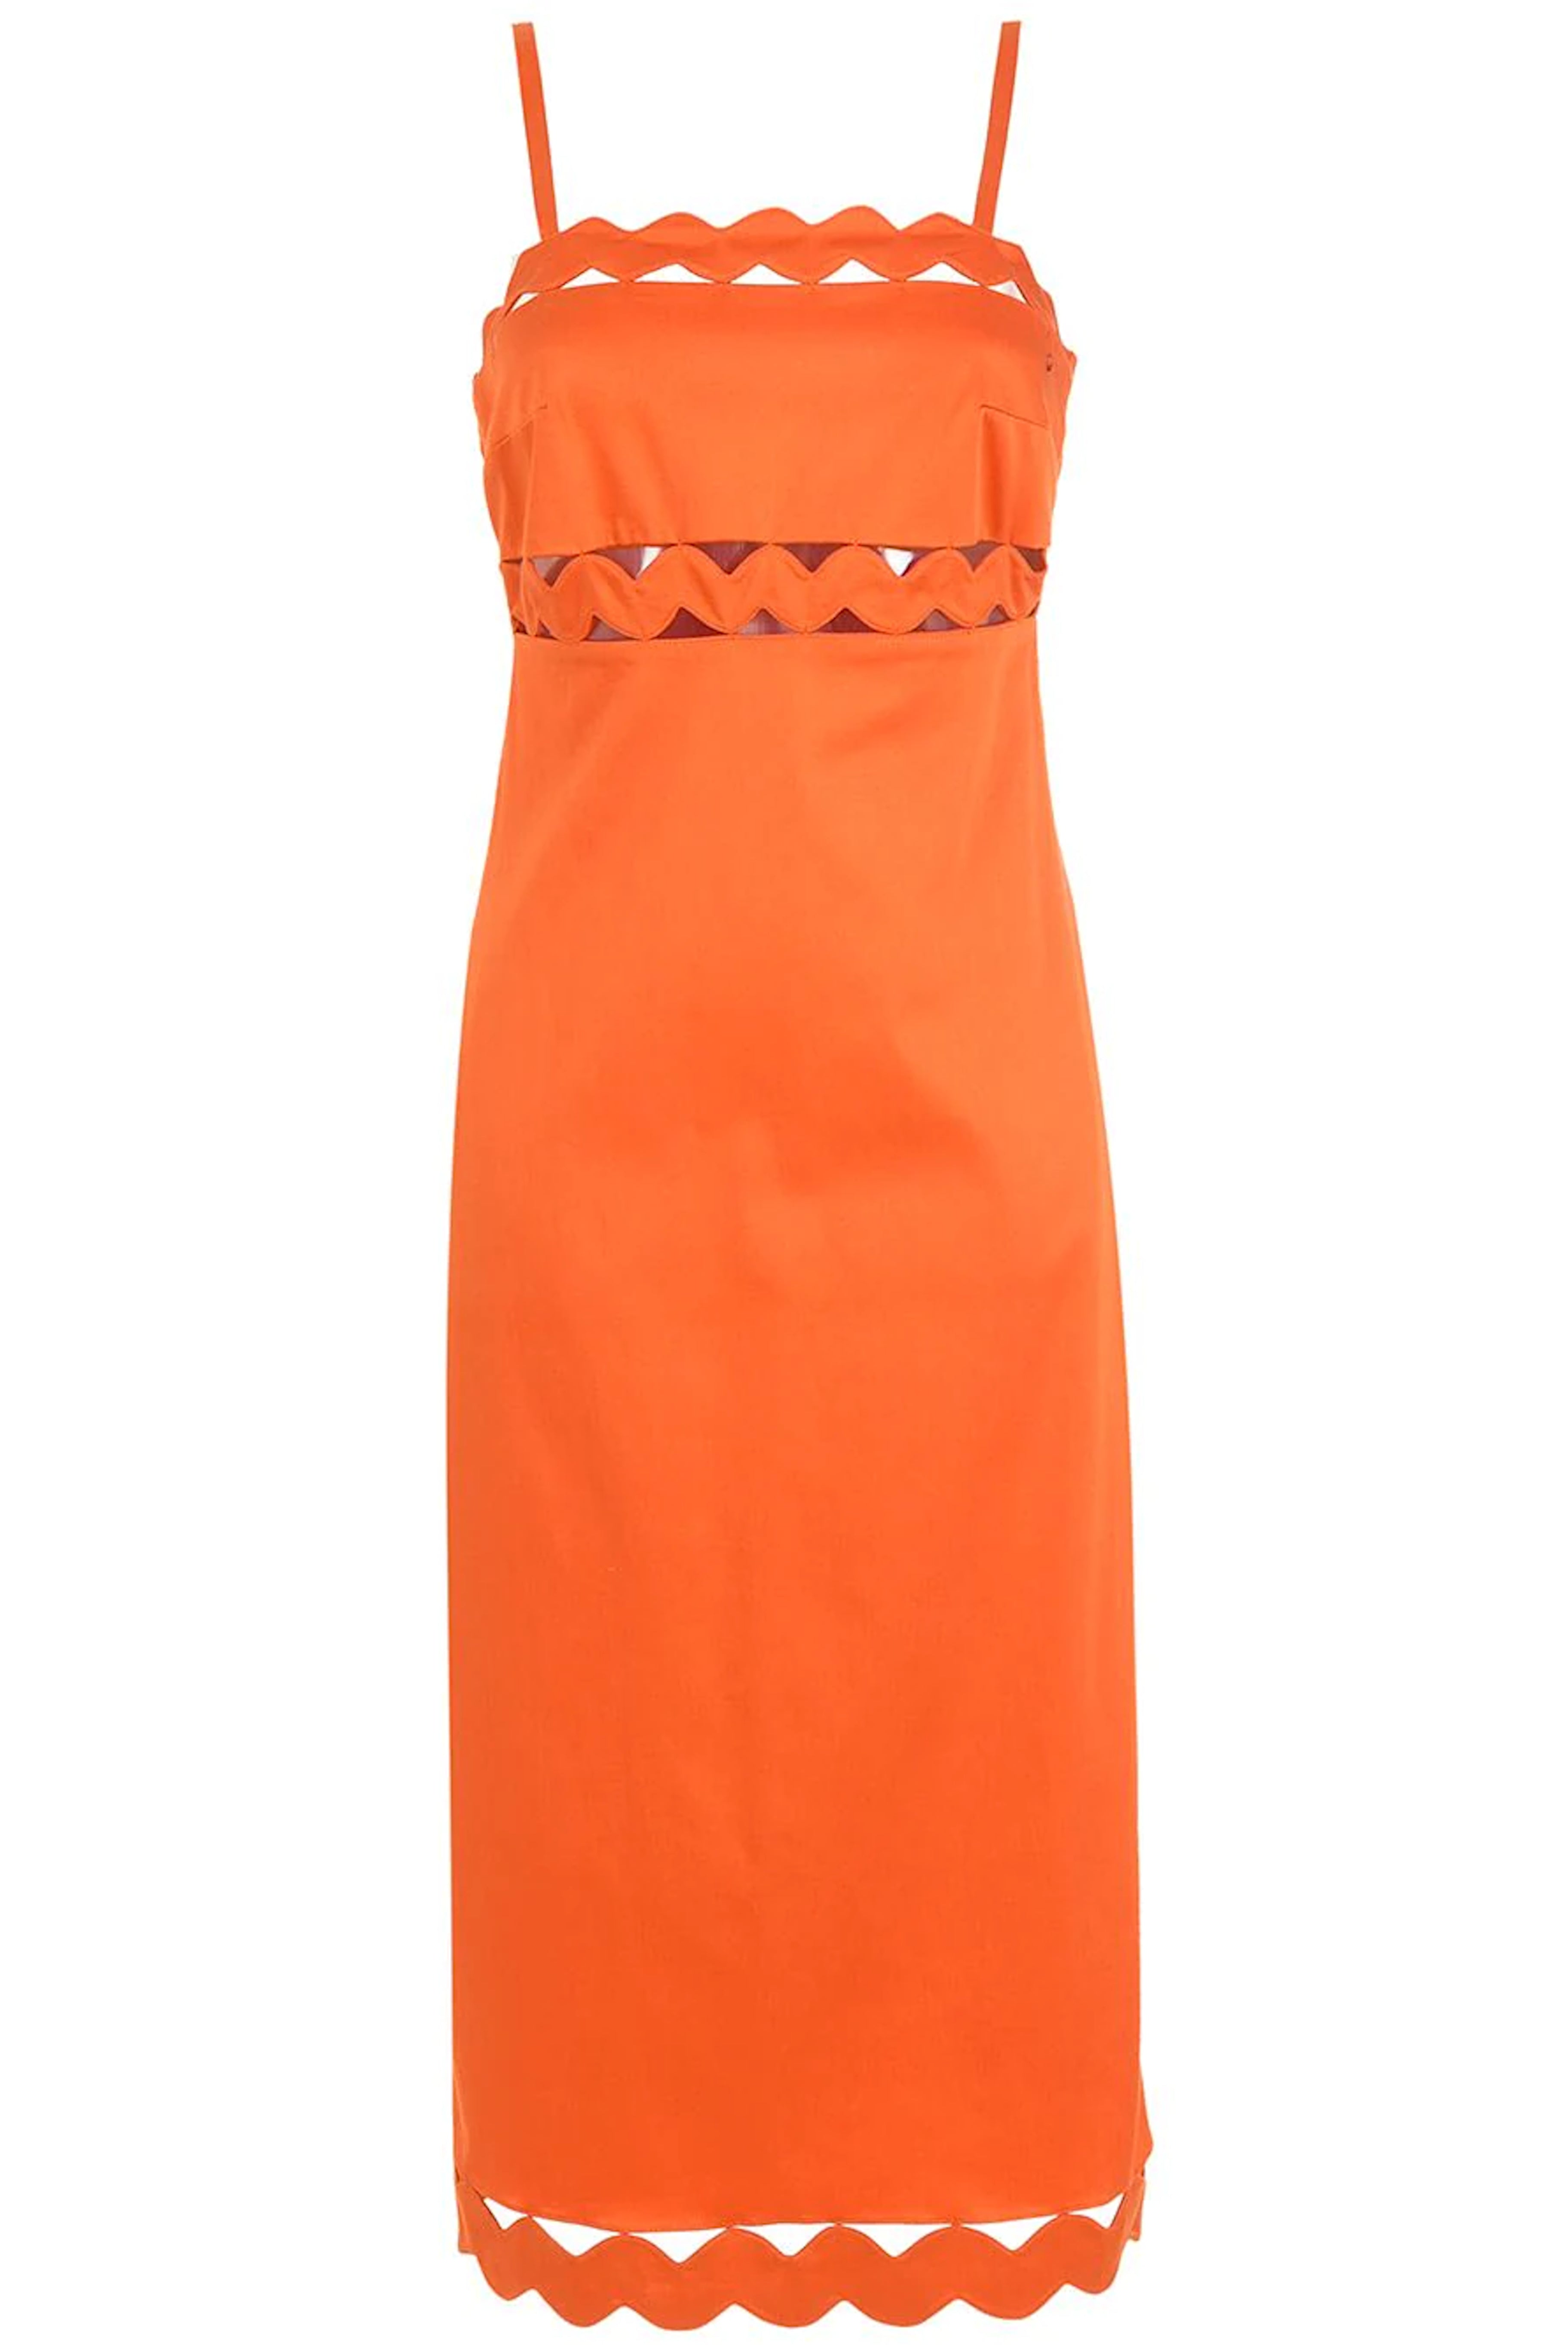 Moves Orange Midi Dress With Straps Product